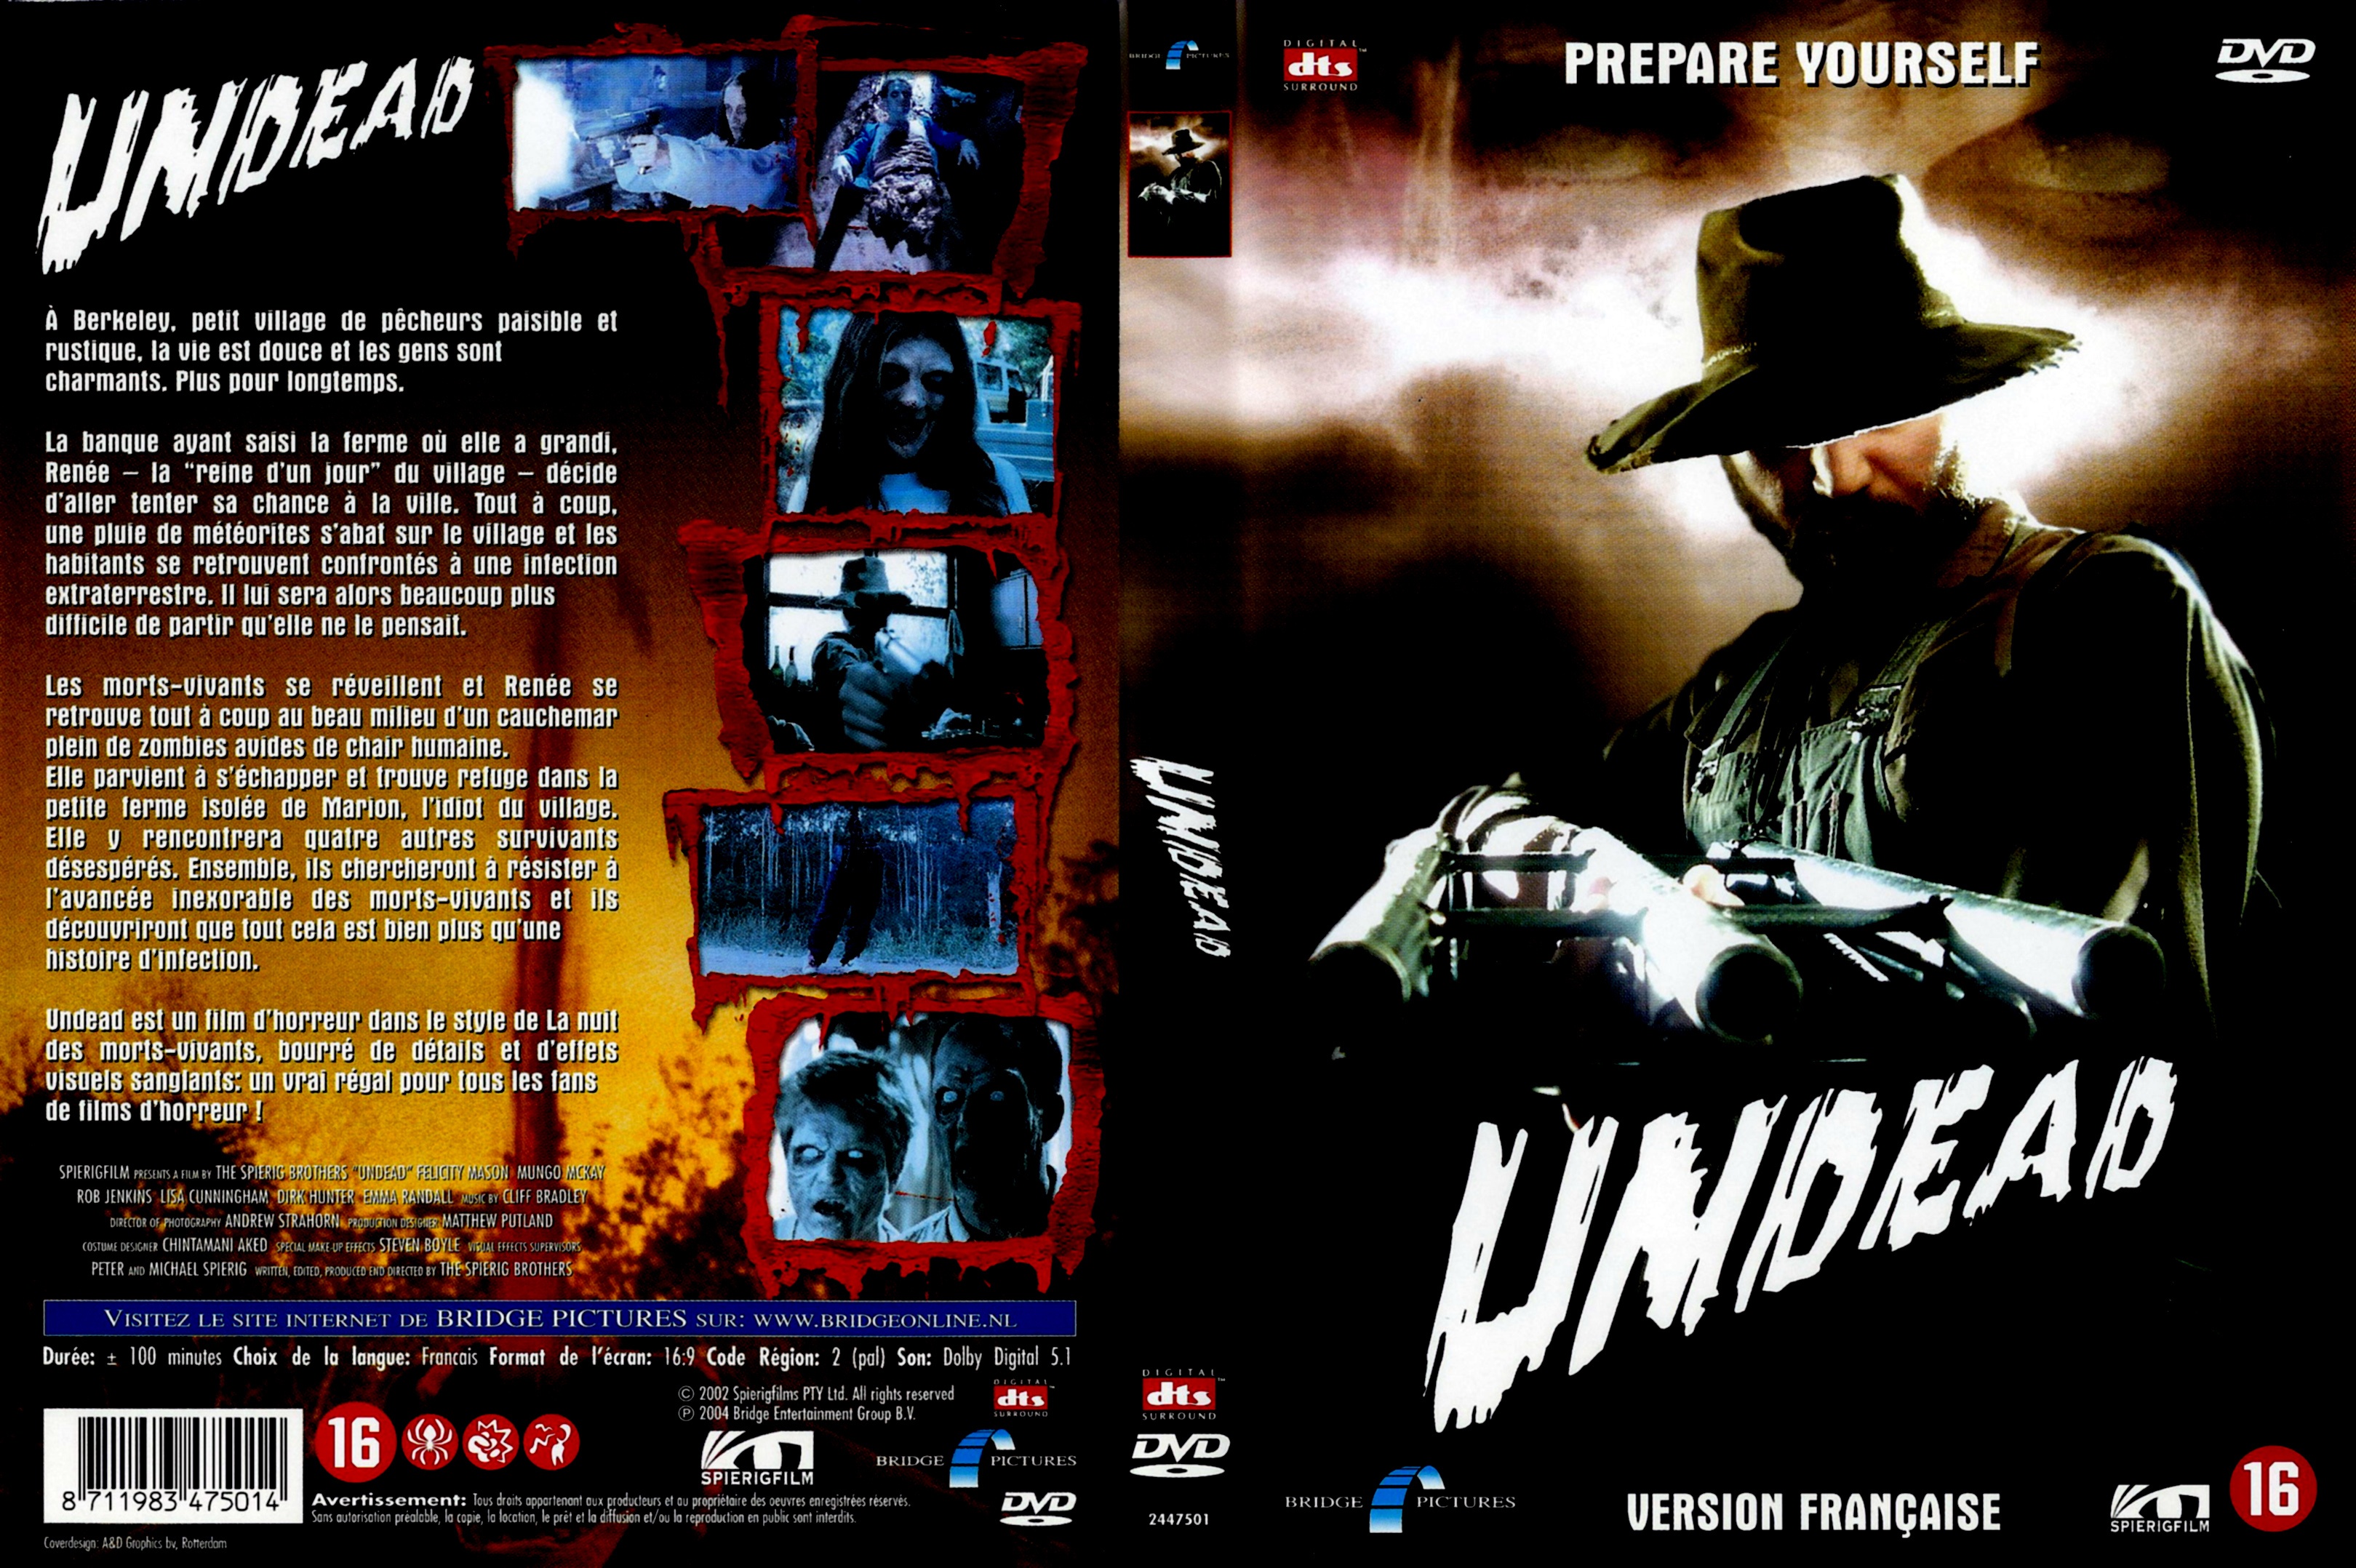 Jaquette DVD Undead v2